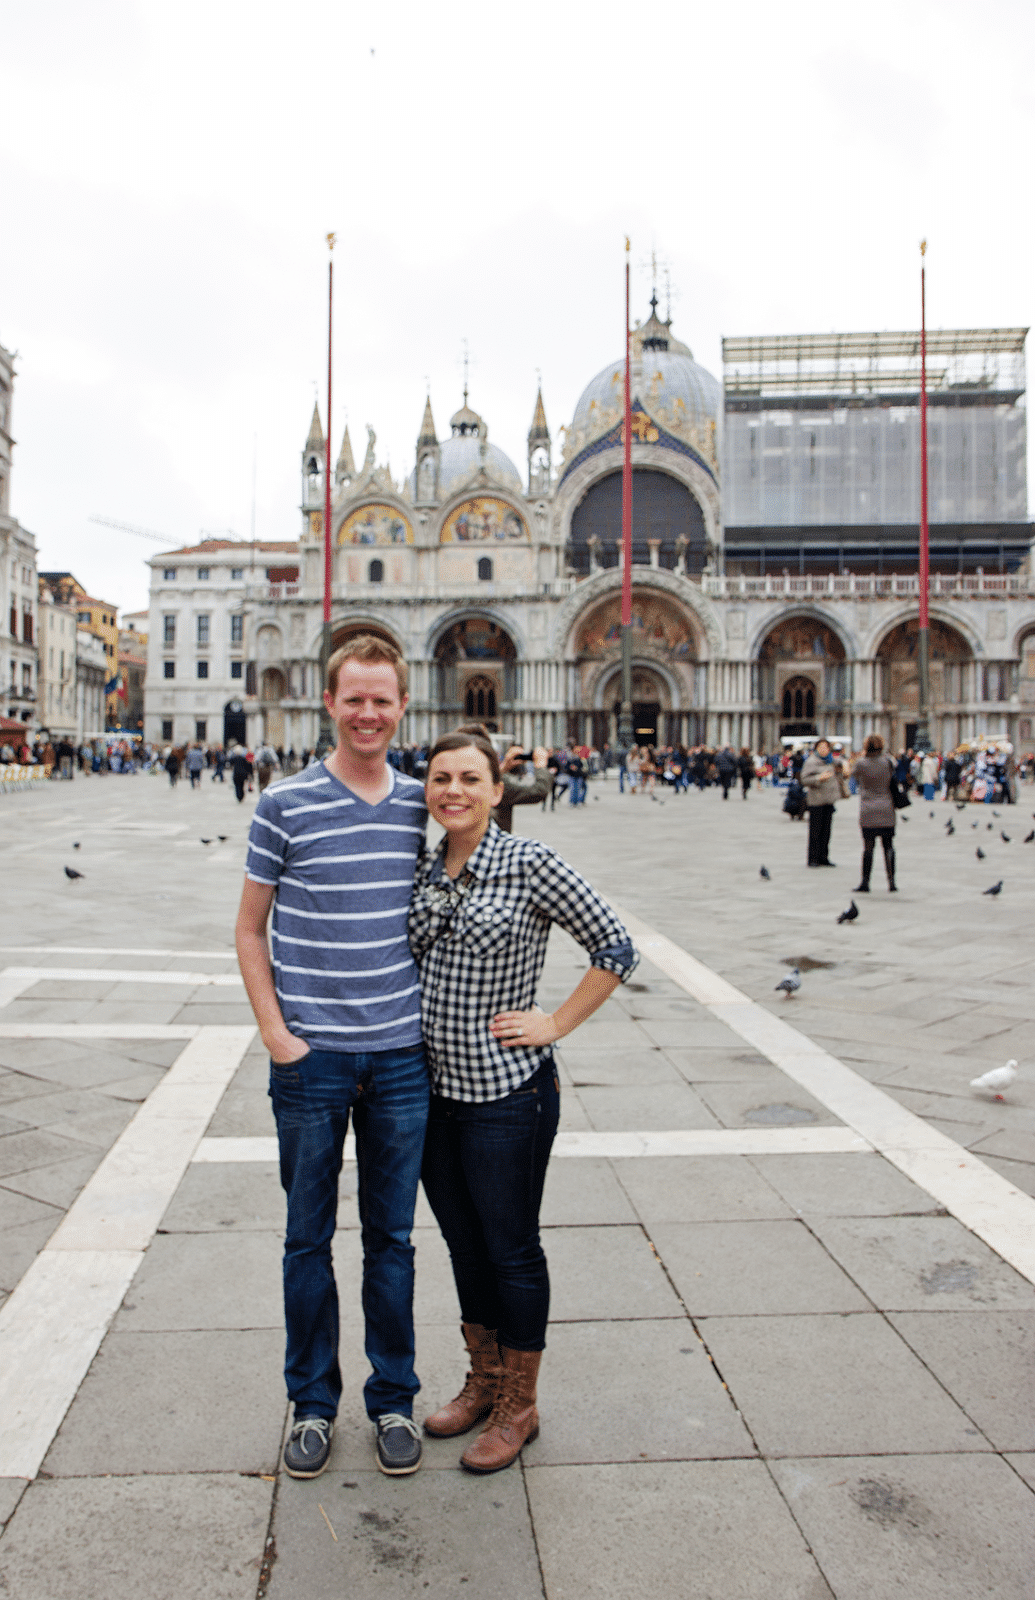 Italy Day 1: Venice, St. Mark’s Basilica and Dodge Palace